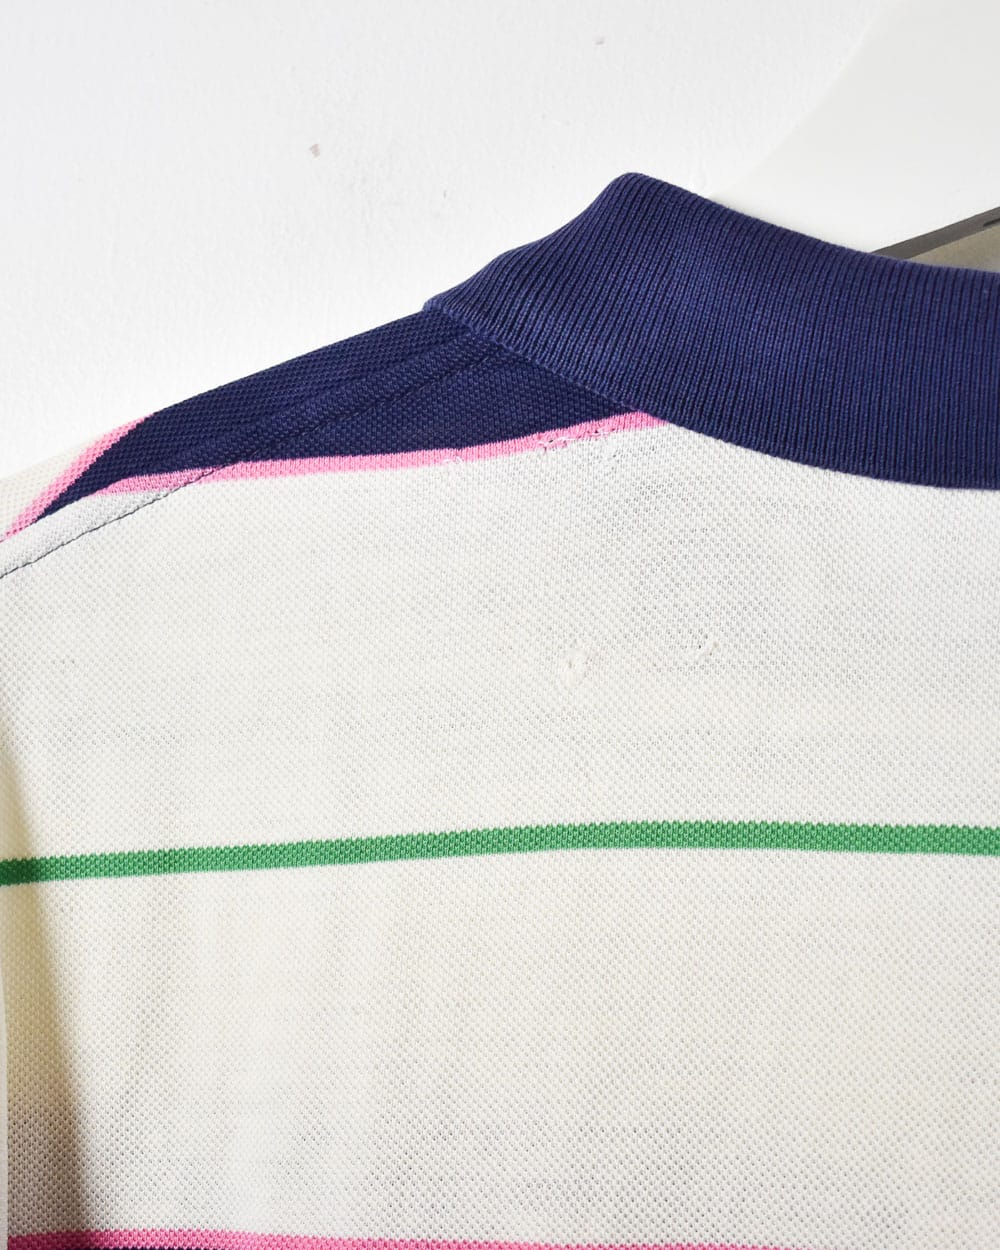 White Chemise Lacoste Striped Polo Shirt - Medium